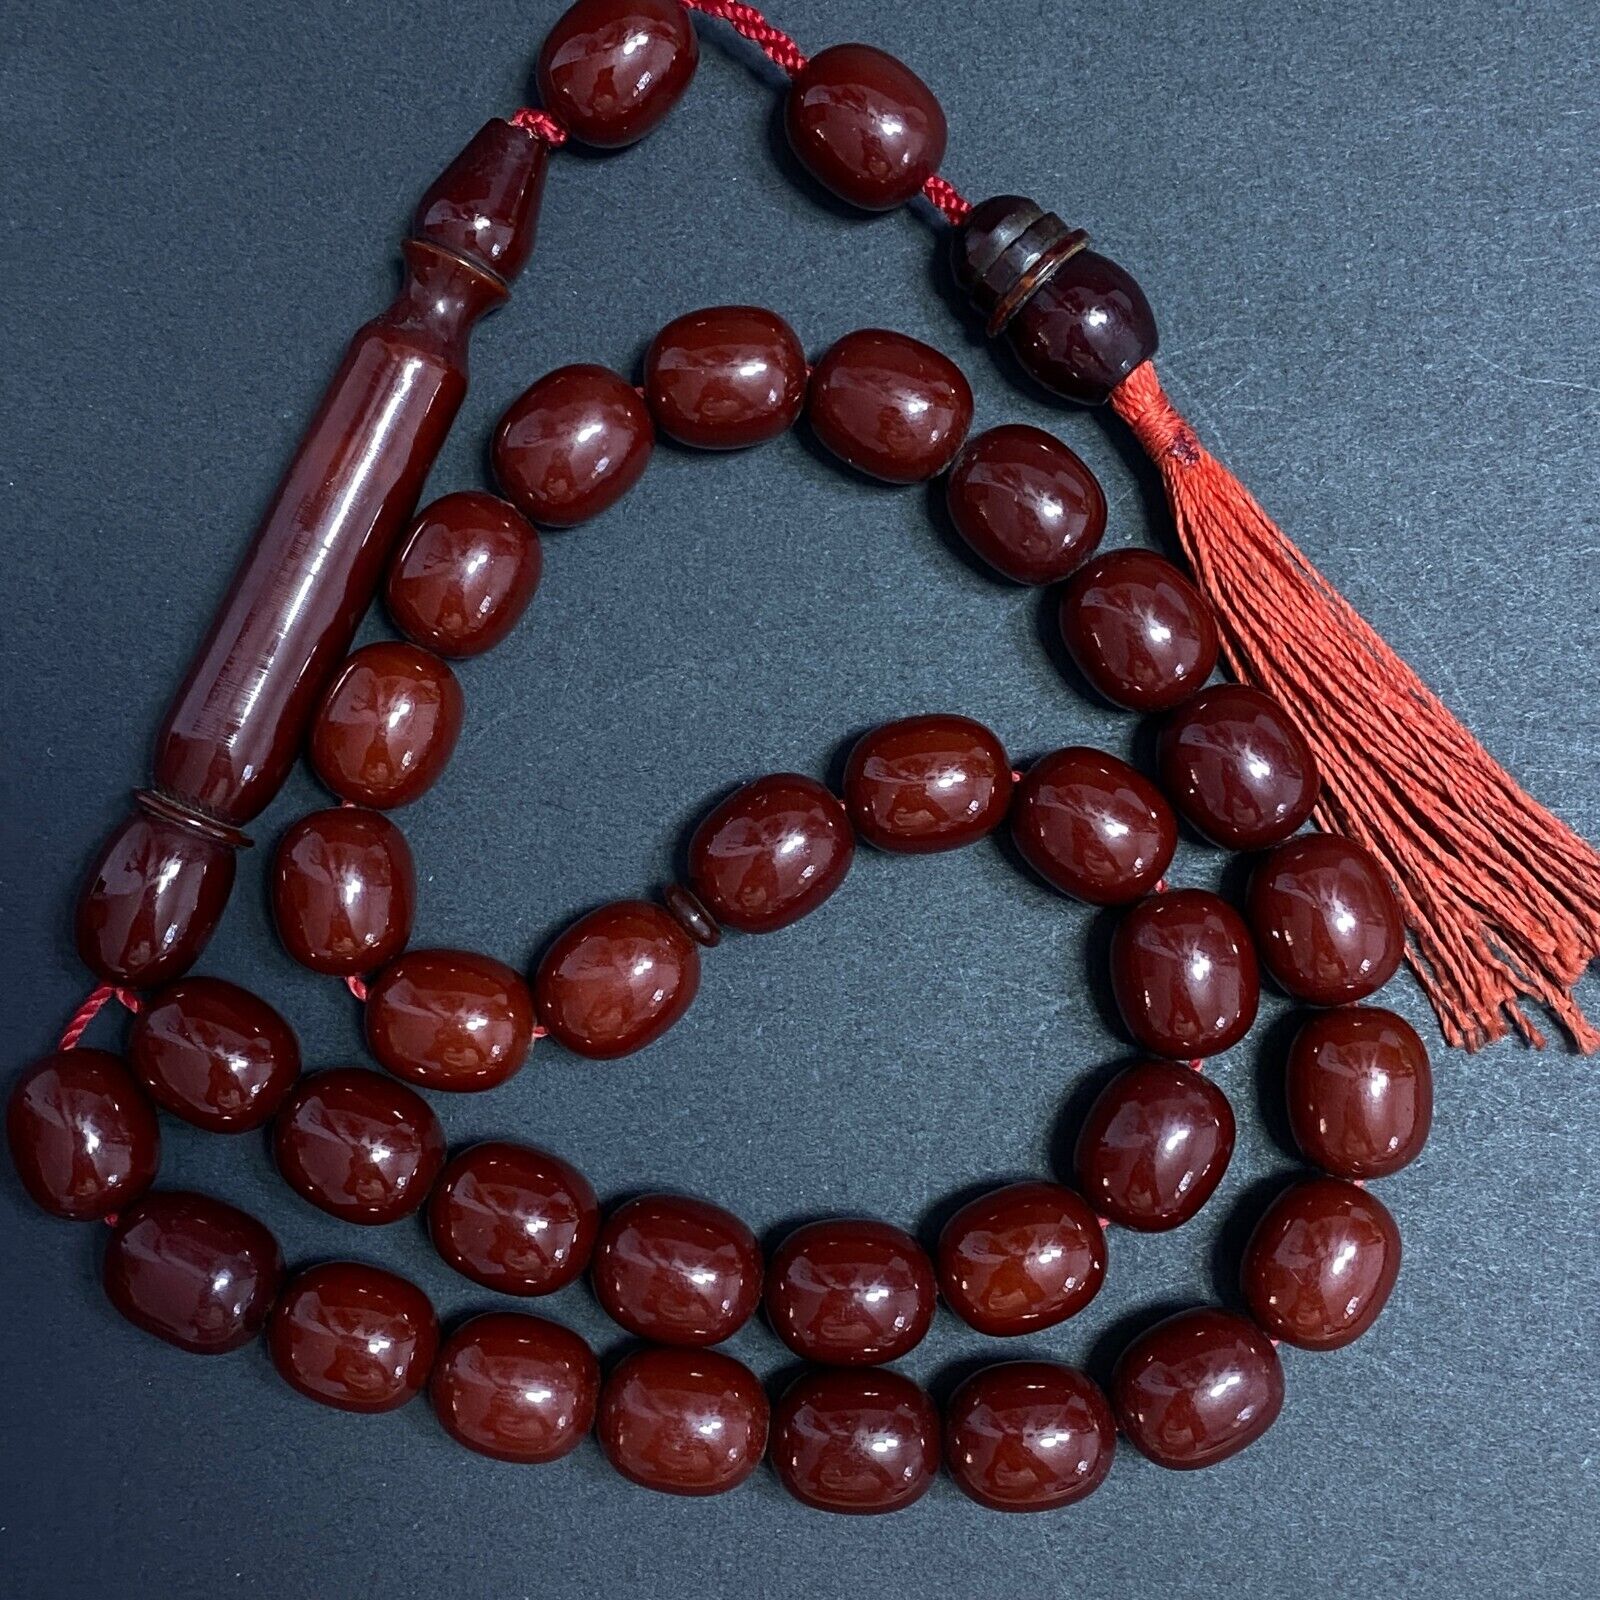 33 Prayer Beads Islamic faturan german Amber Bakelite Rosary komboloi Tasbih